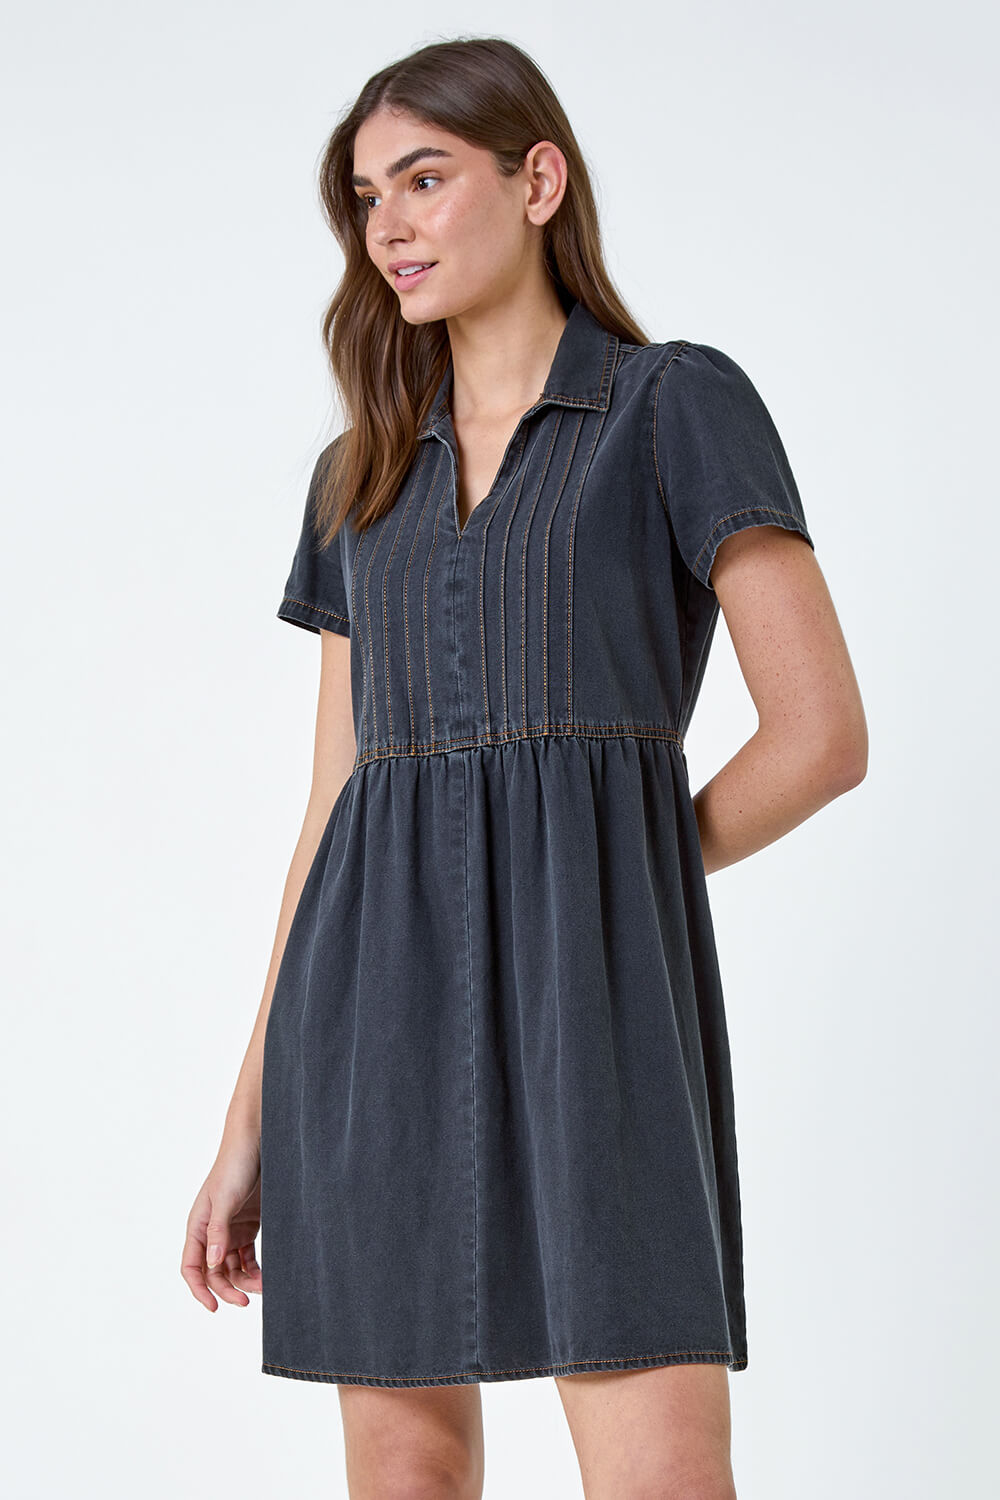 Black Cotton Denim Collared Dress, Image 2 of 5